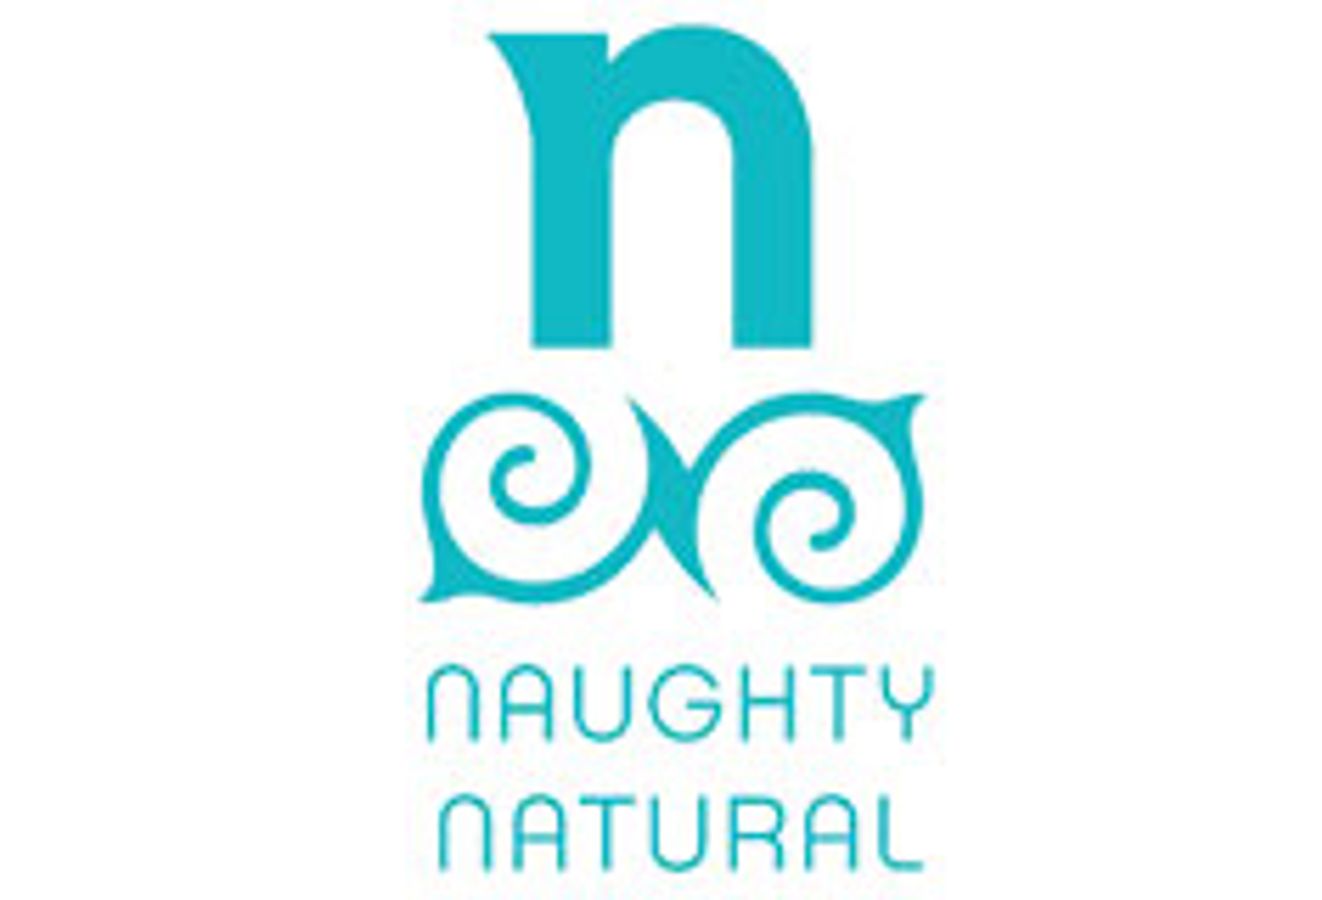 NaughtyNaturals.com